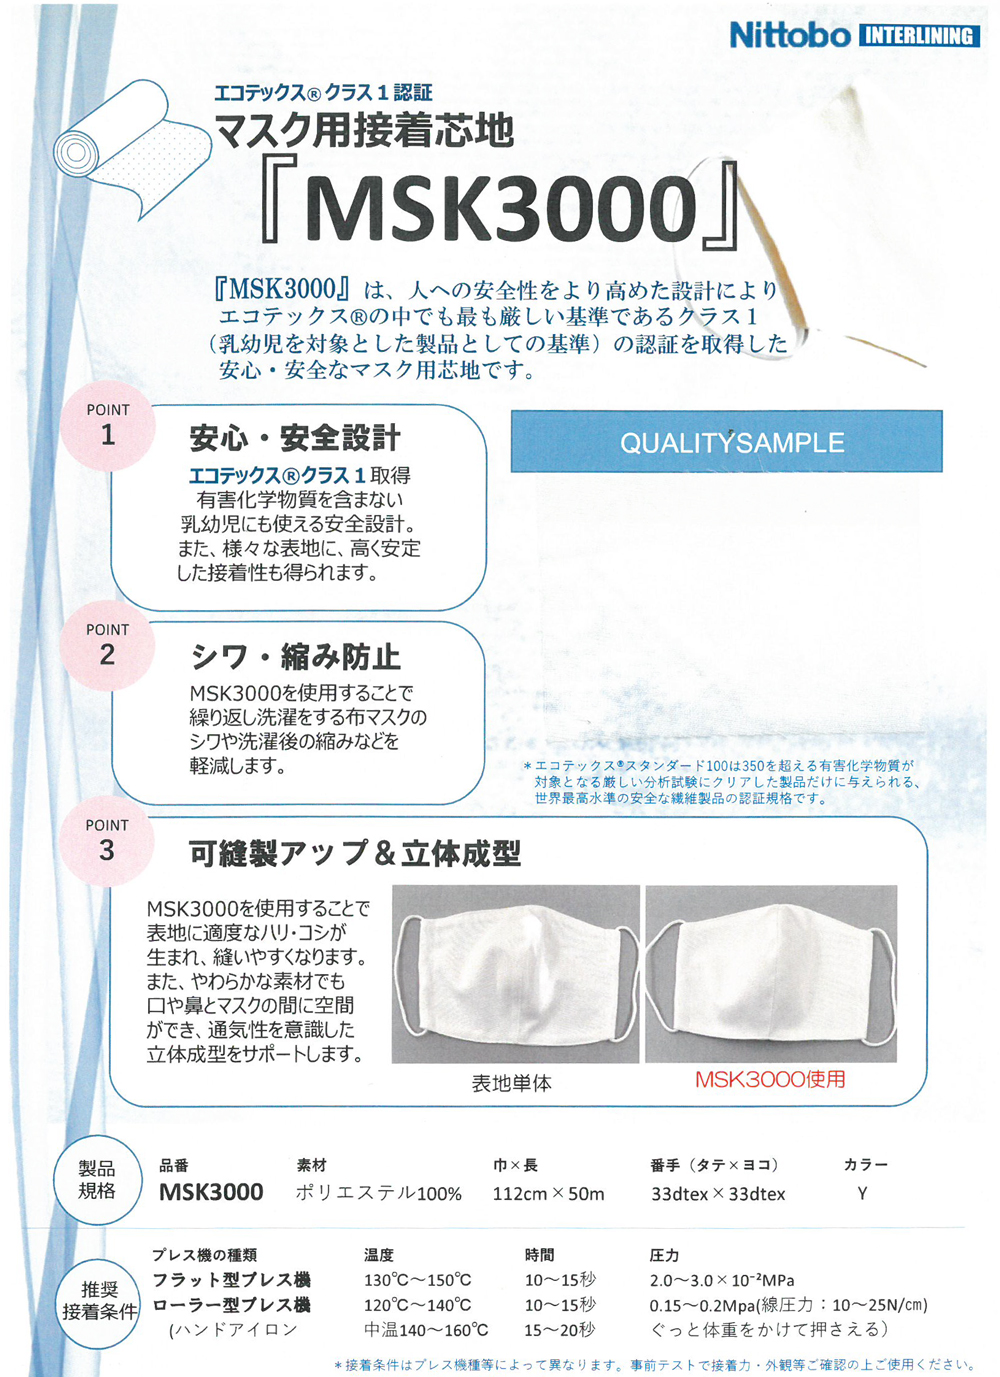 MSK3000 Ecotex® Standard 100 인증 마스크용 접착심지 닛토보 (닛토보인터라이닝)